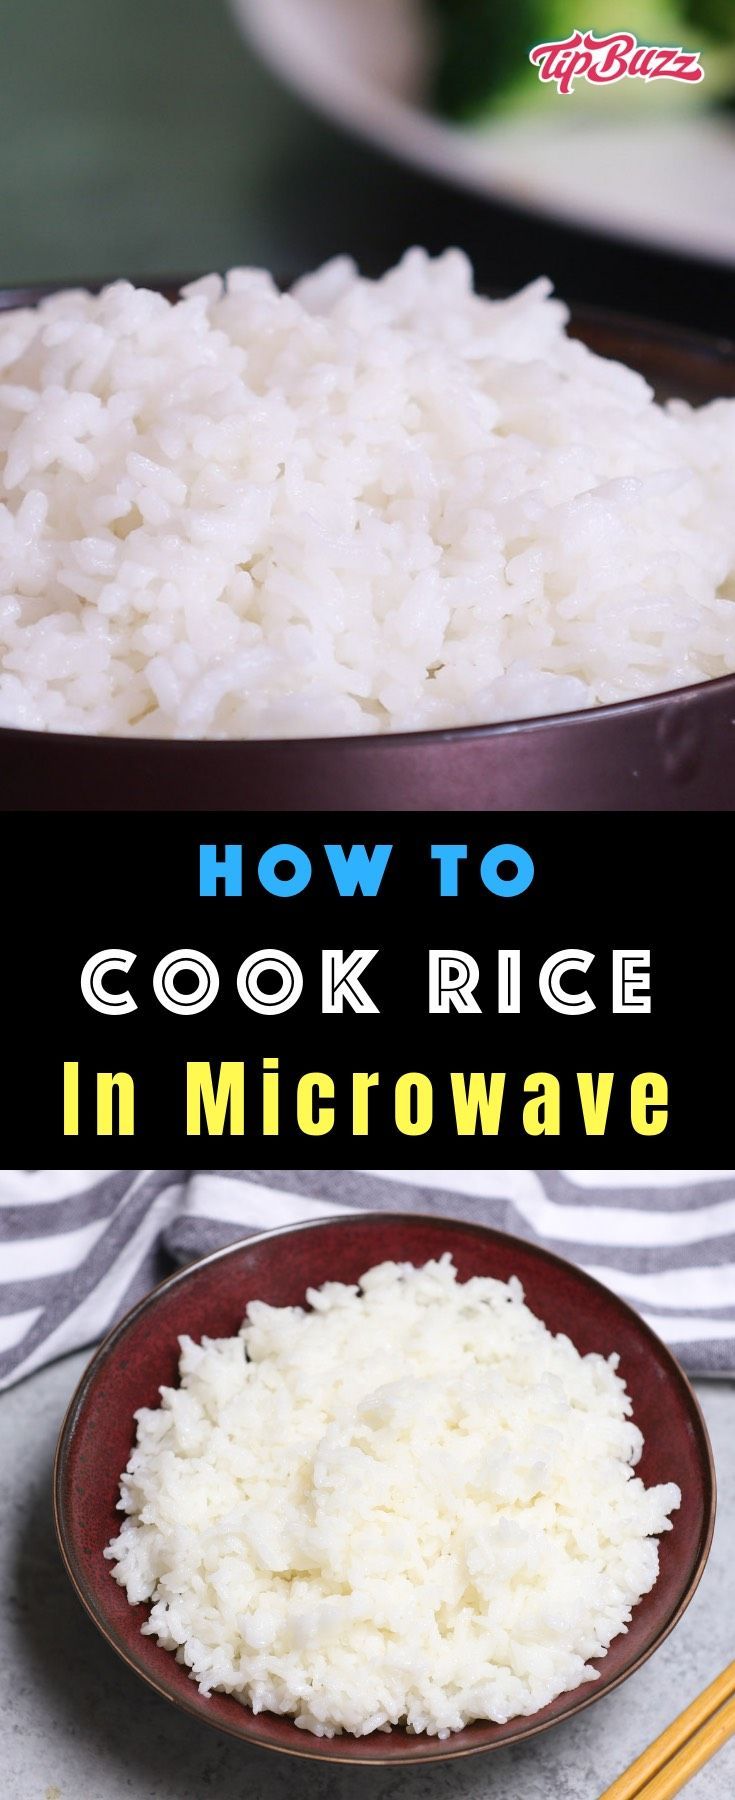 Easy Microwave Rice - TipBuzz - Easy Microwave Rice - TipBuzz -   18 diy Food microwave ideas